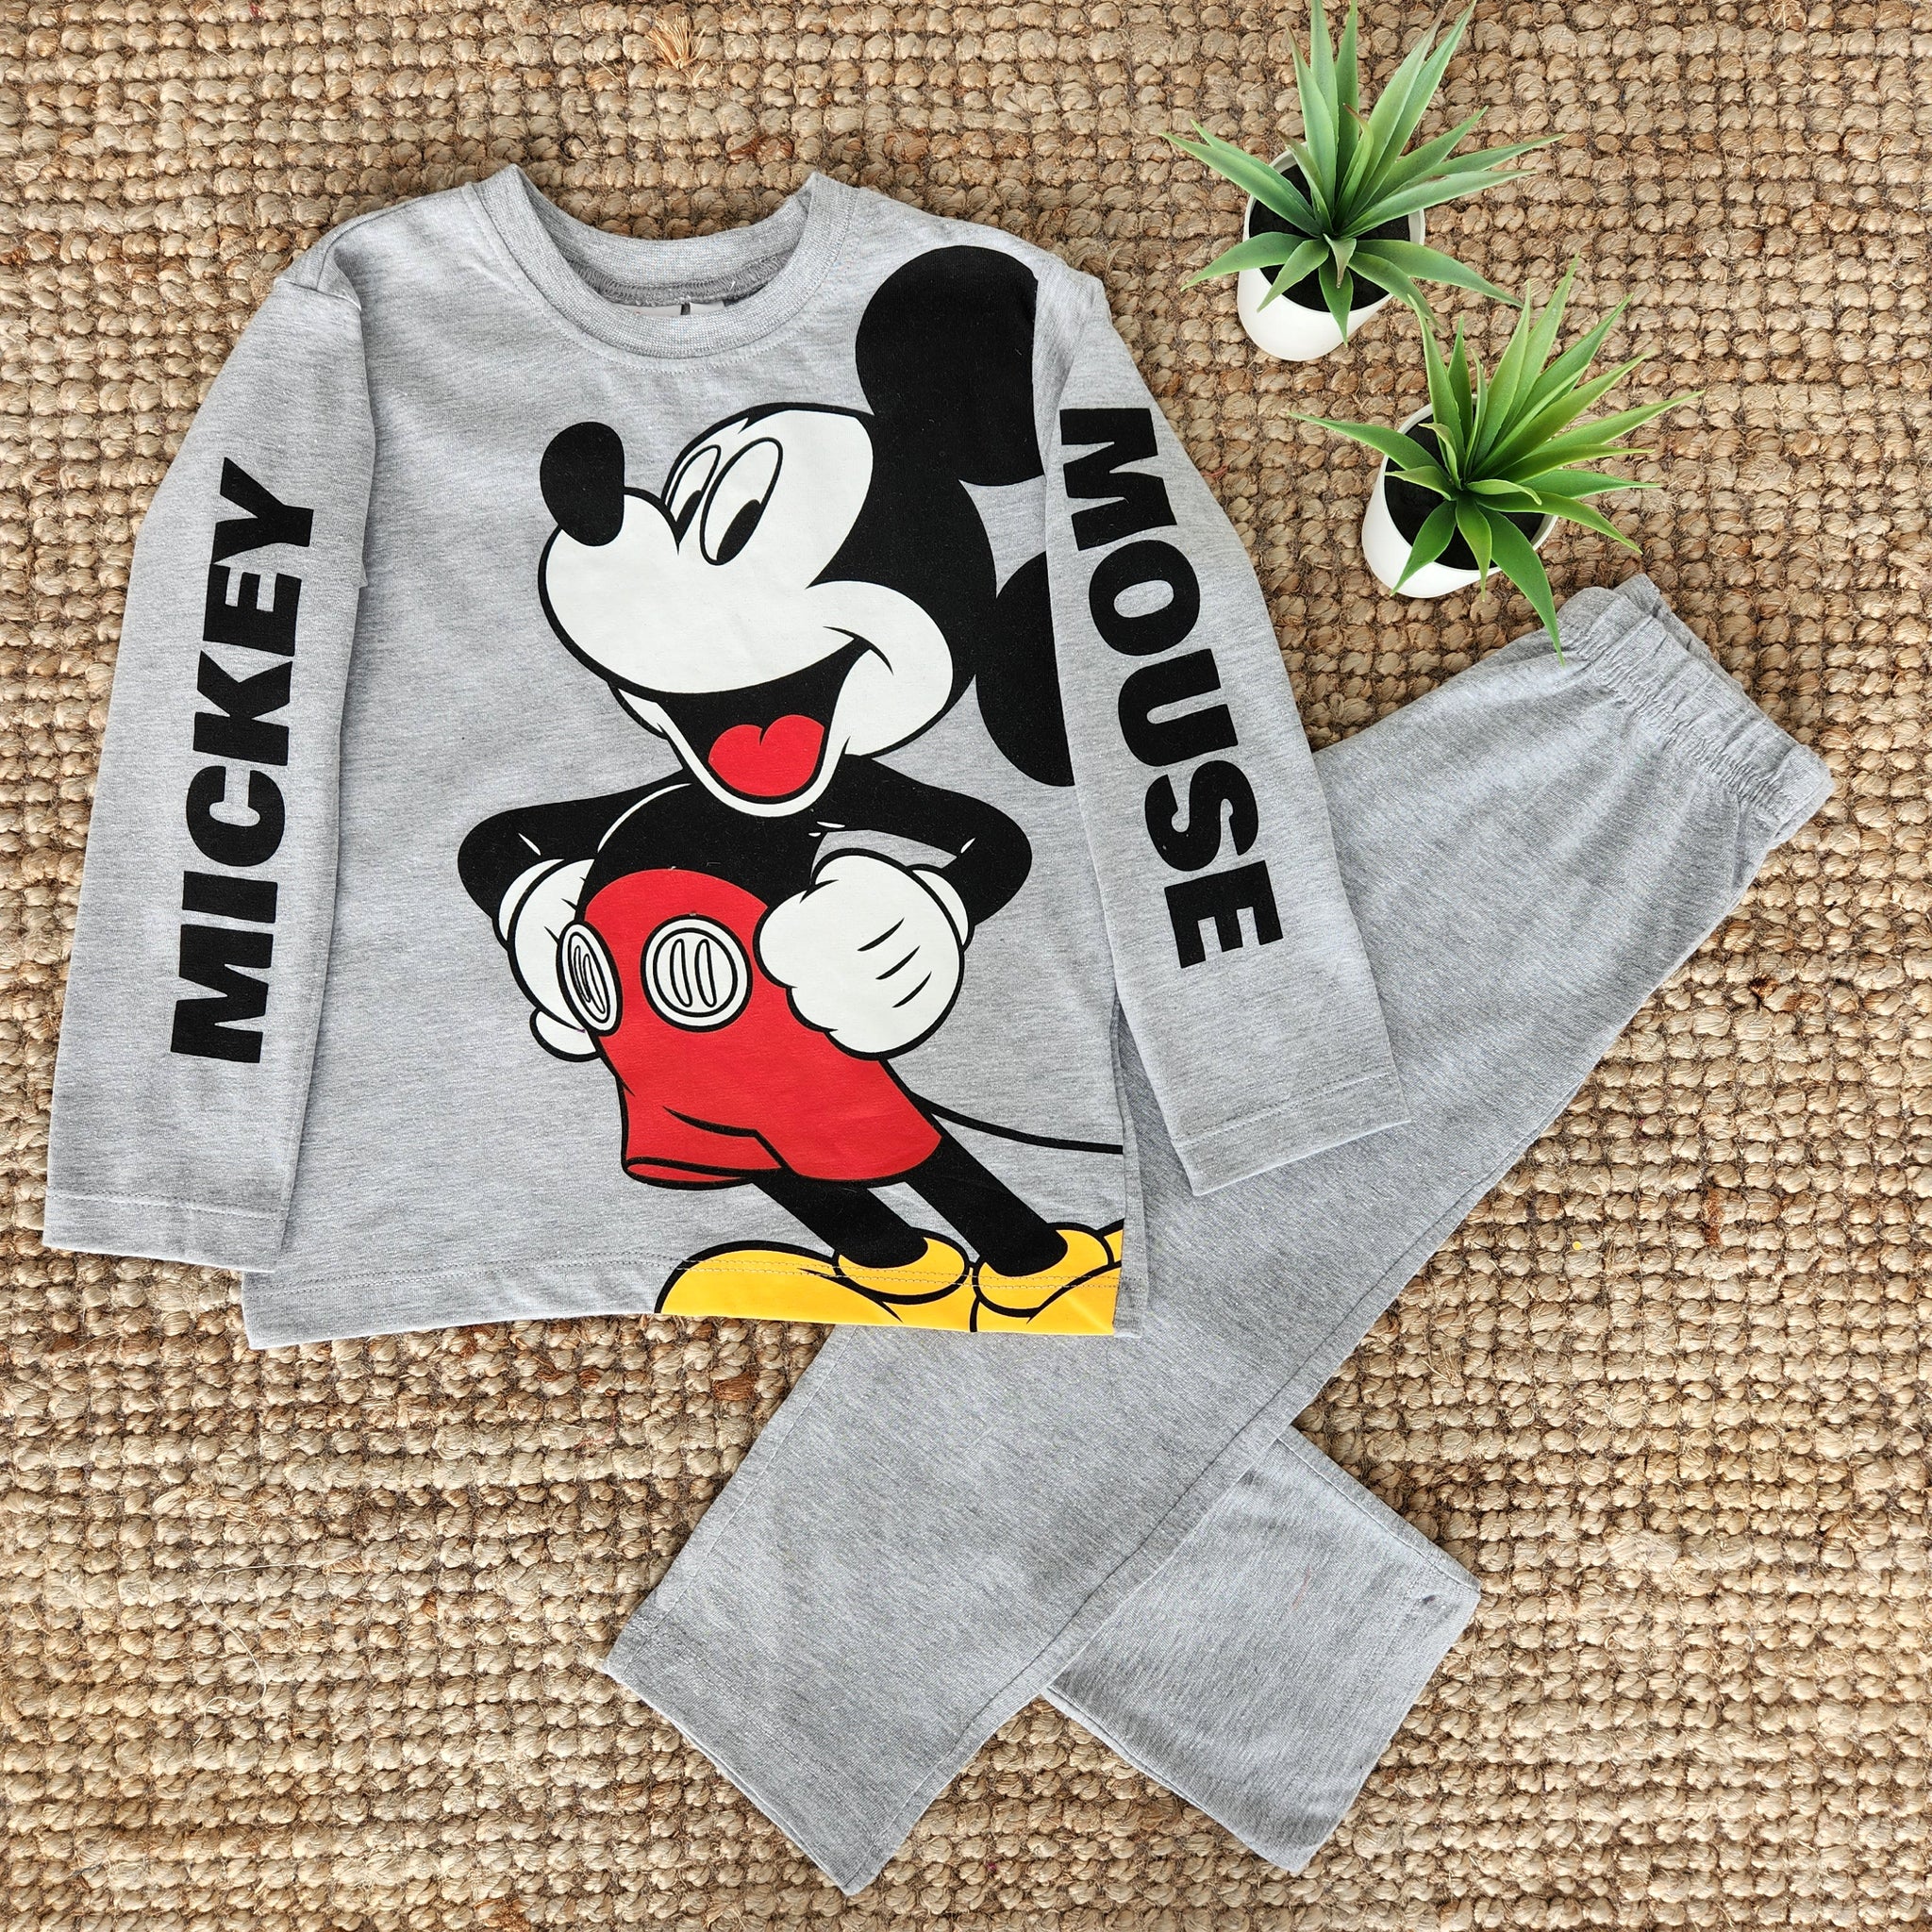 Pijama Mickey Mouse top